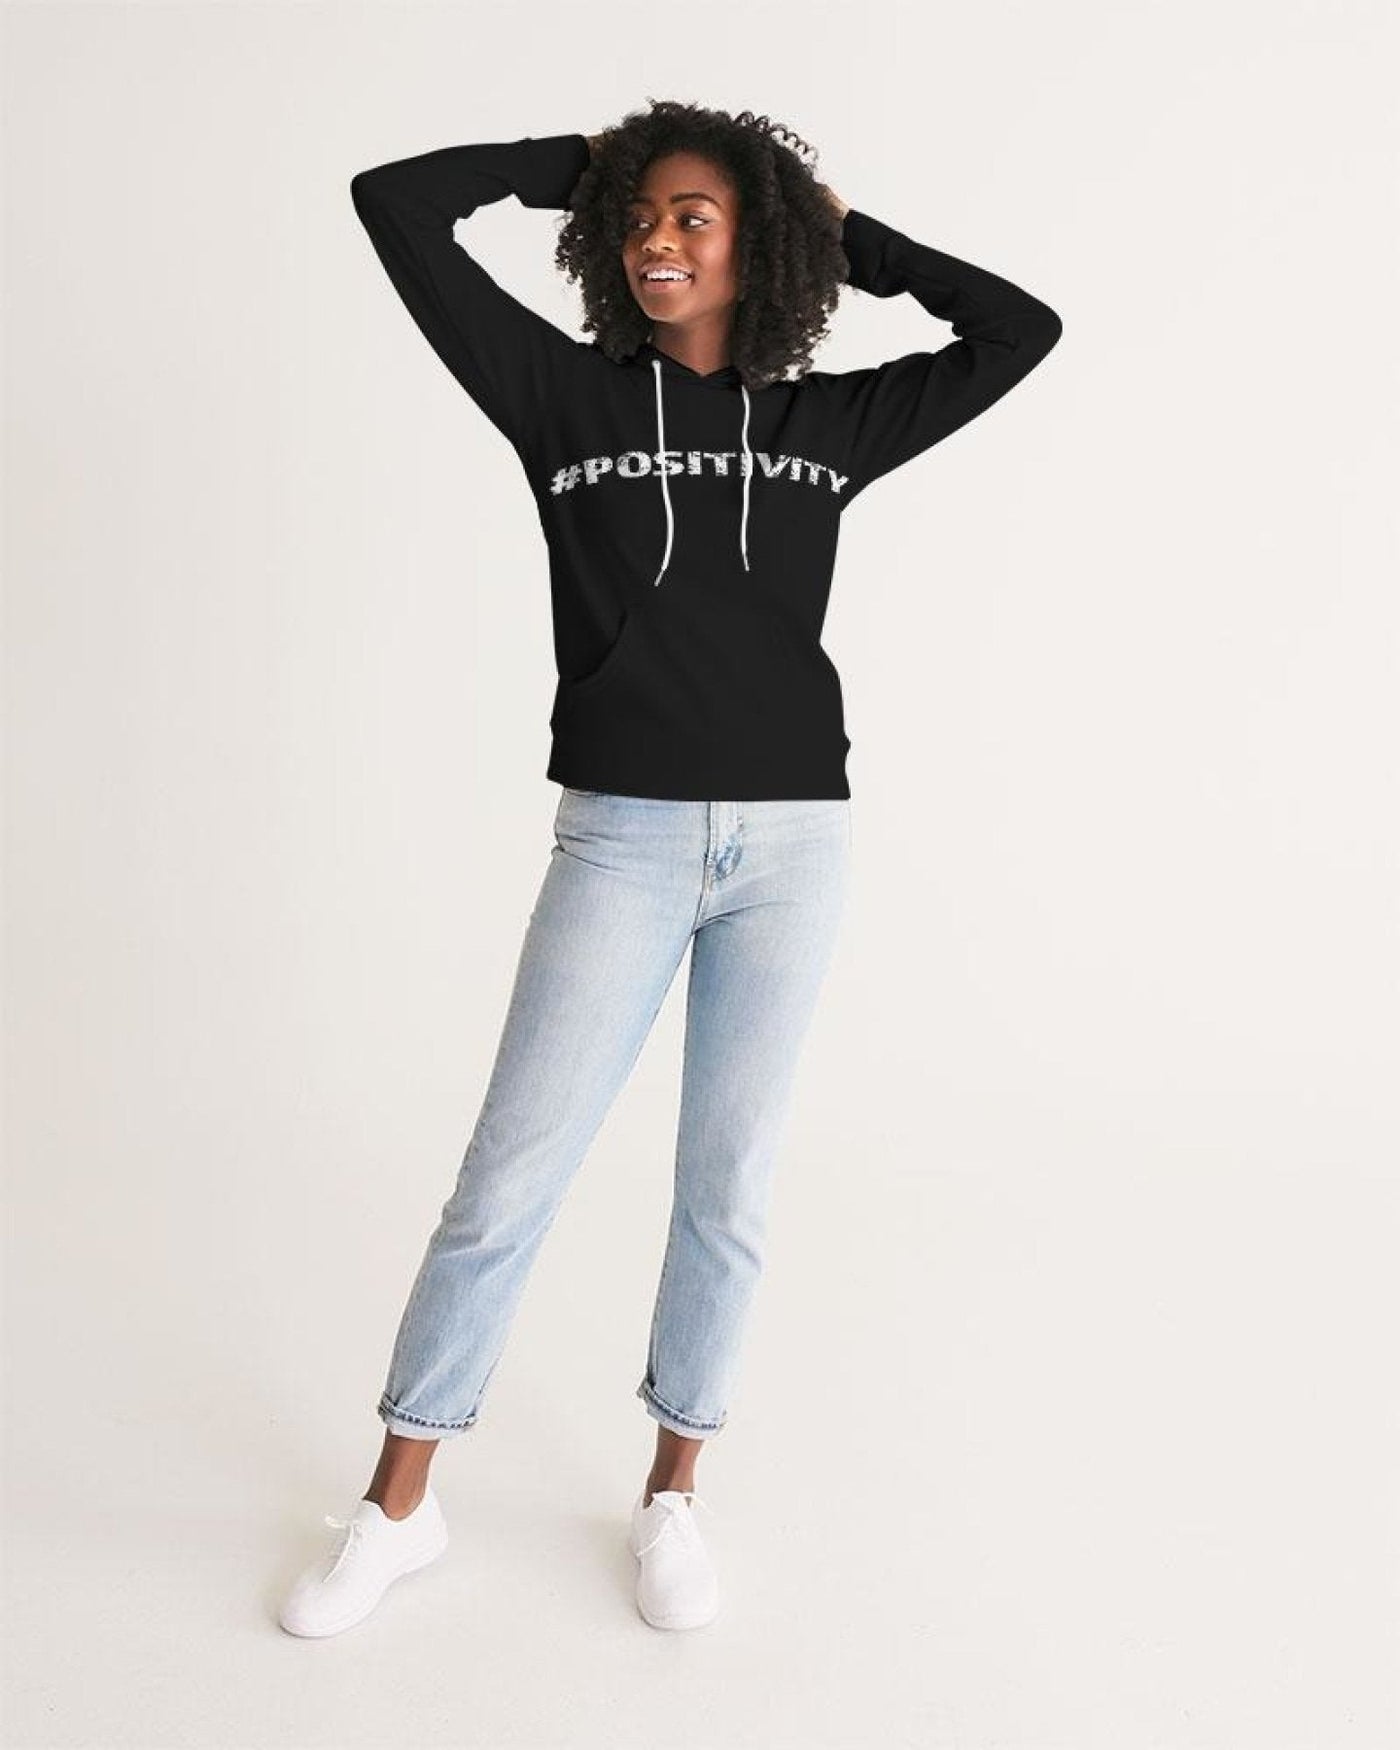 Womens Hoodie - Pullover Hooded Sweatshirt - Graphic/inspire Positivity - Womens